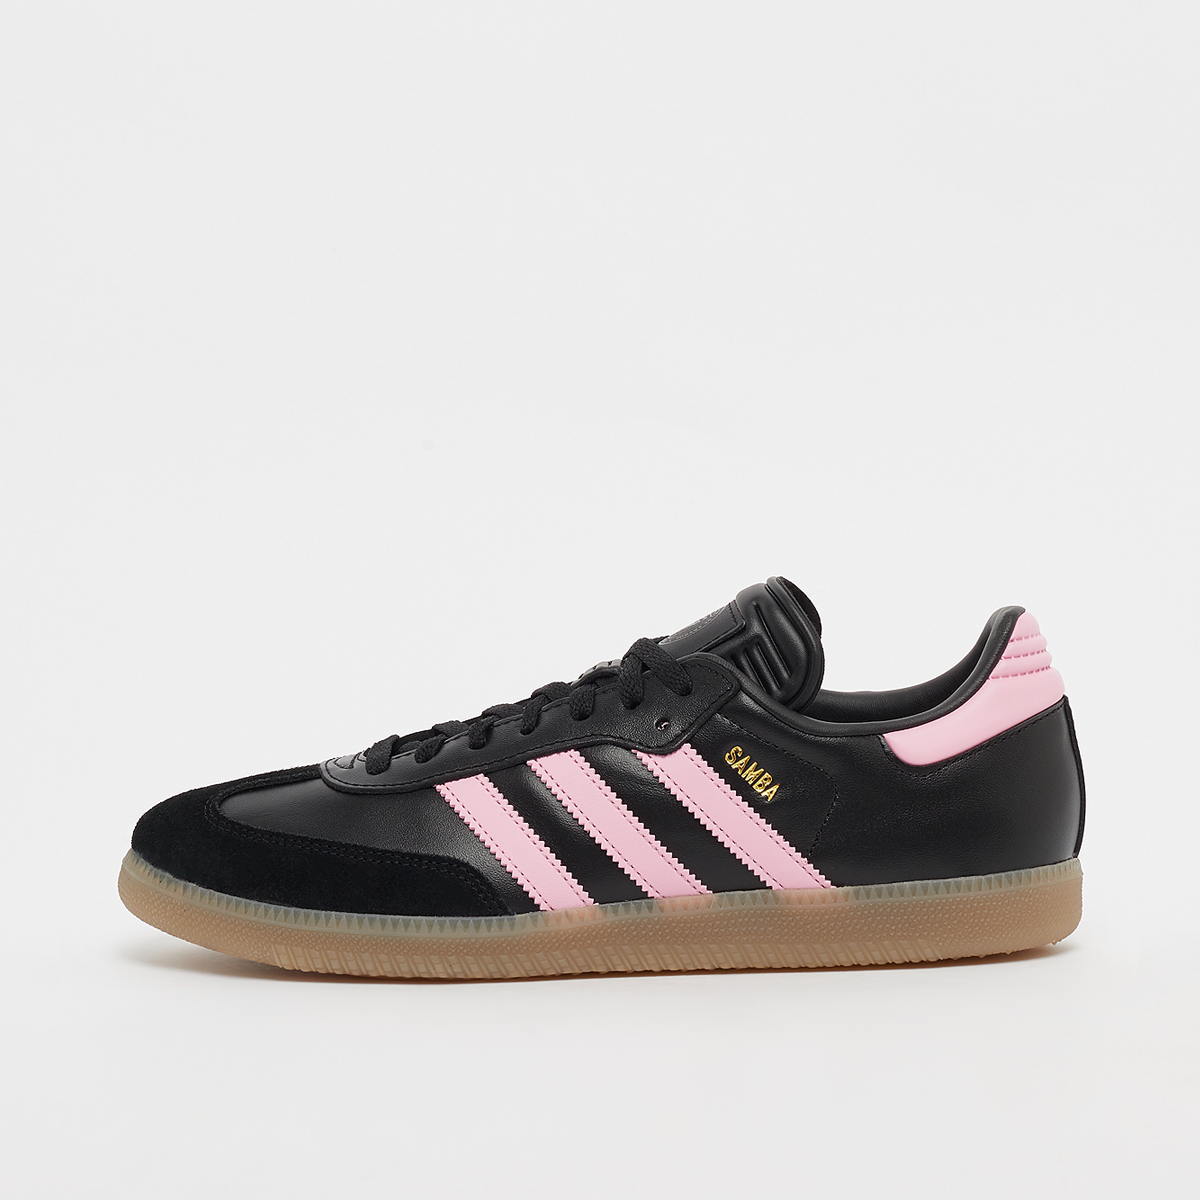 Sneaker Samba Inter Miami, adidas Originals, Footwear, black/pink, taille: 36 2/3